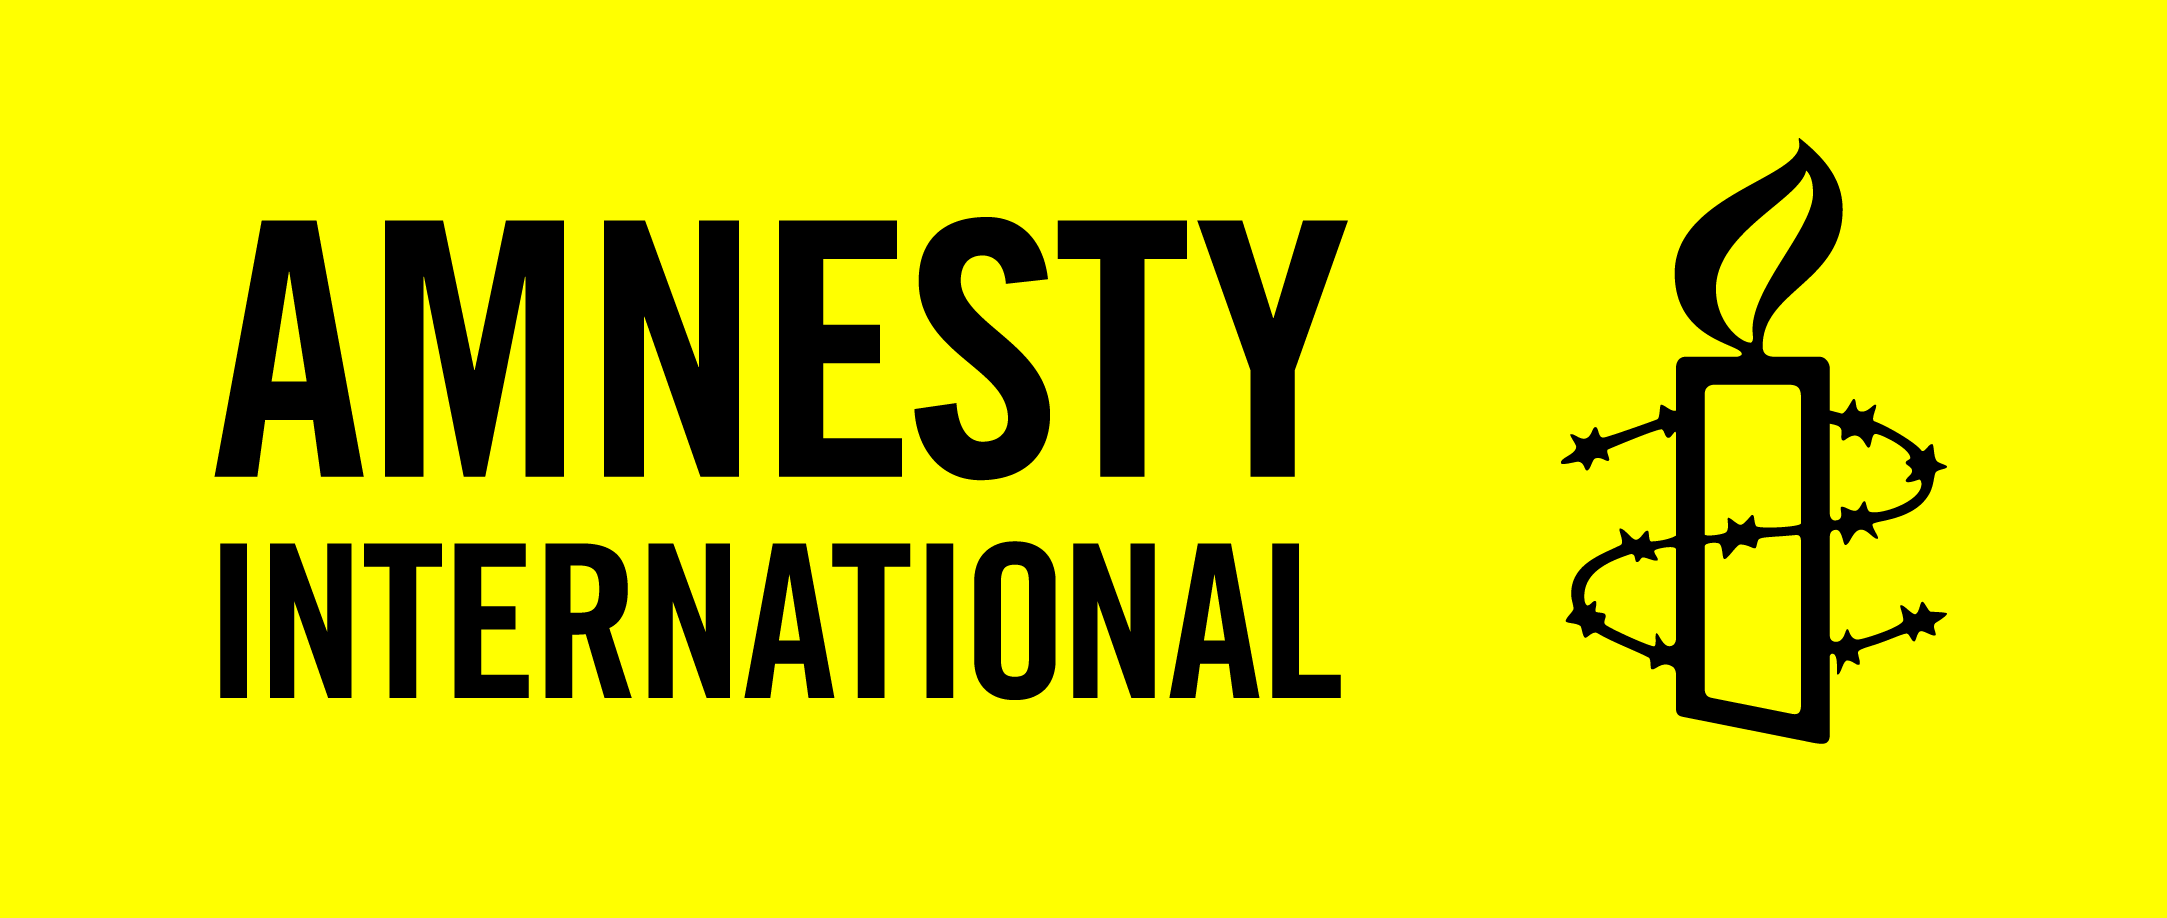 Amnesty International calls Facebook, Google rights abusers